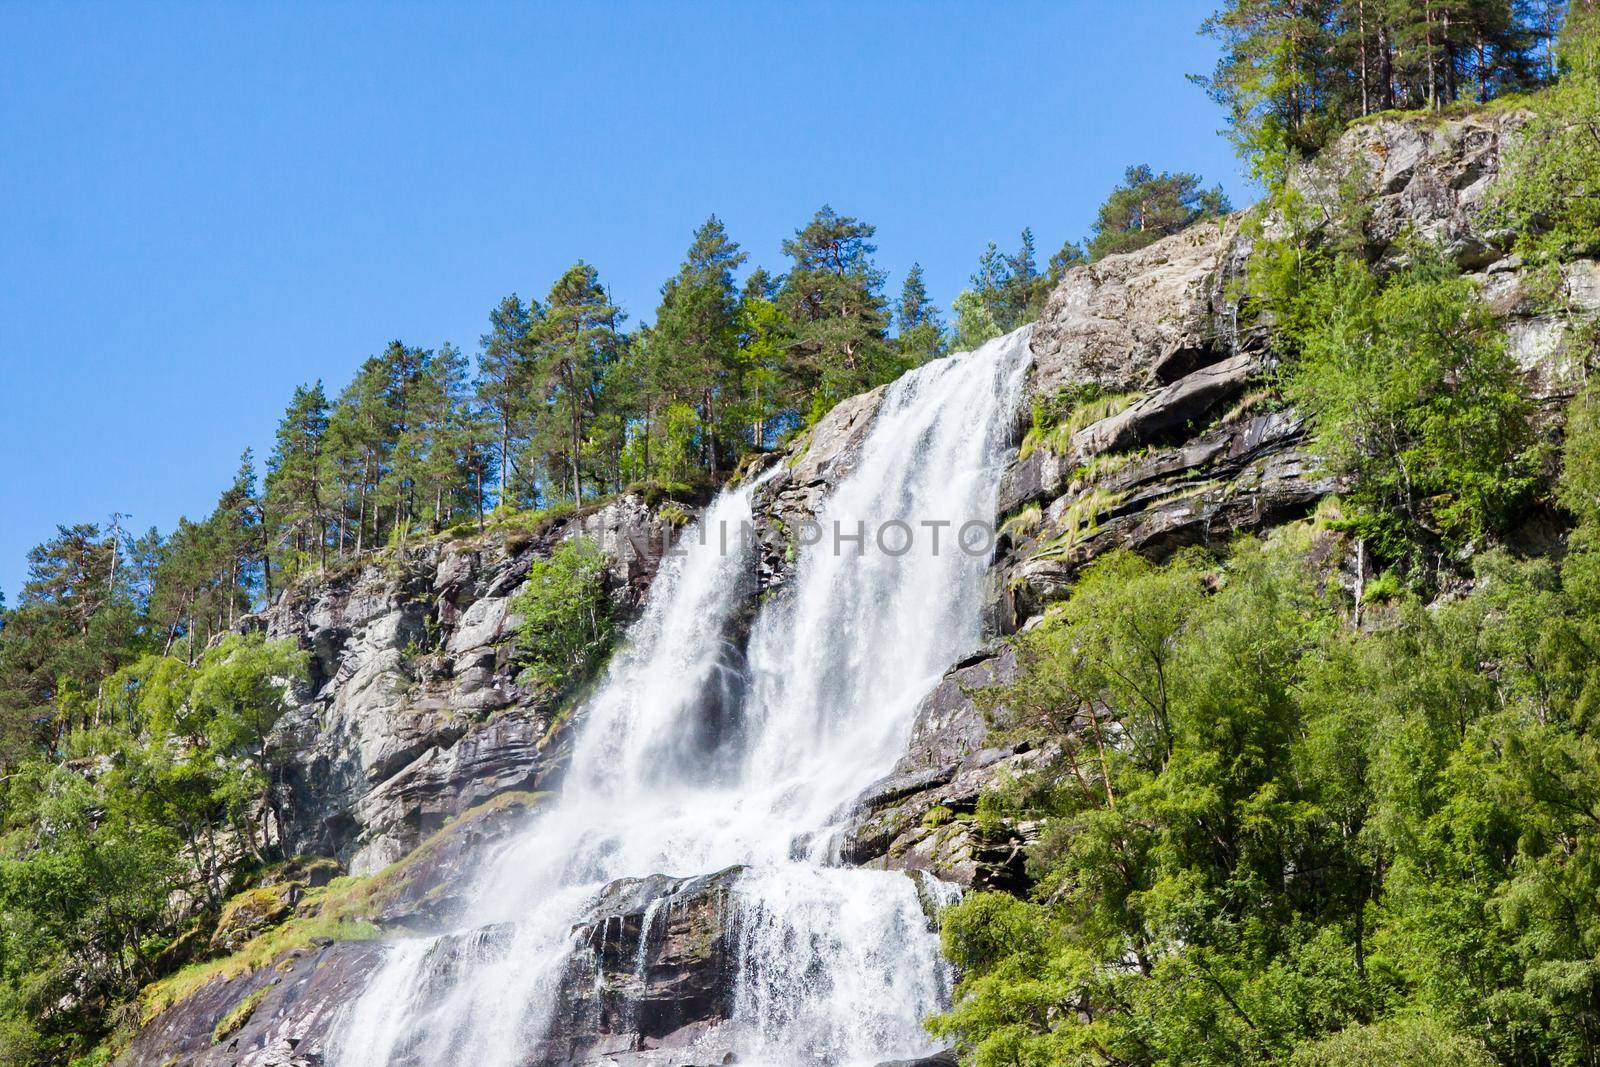 View of Tvindefossen or Tvinnefossen waterfall near Voss in Norway by jp_chretien